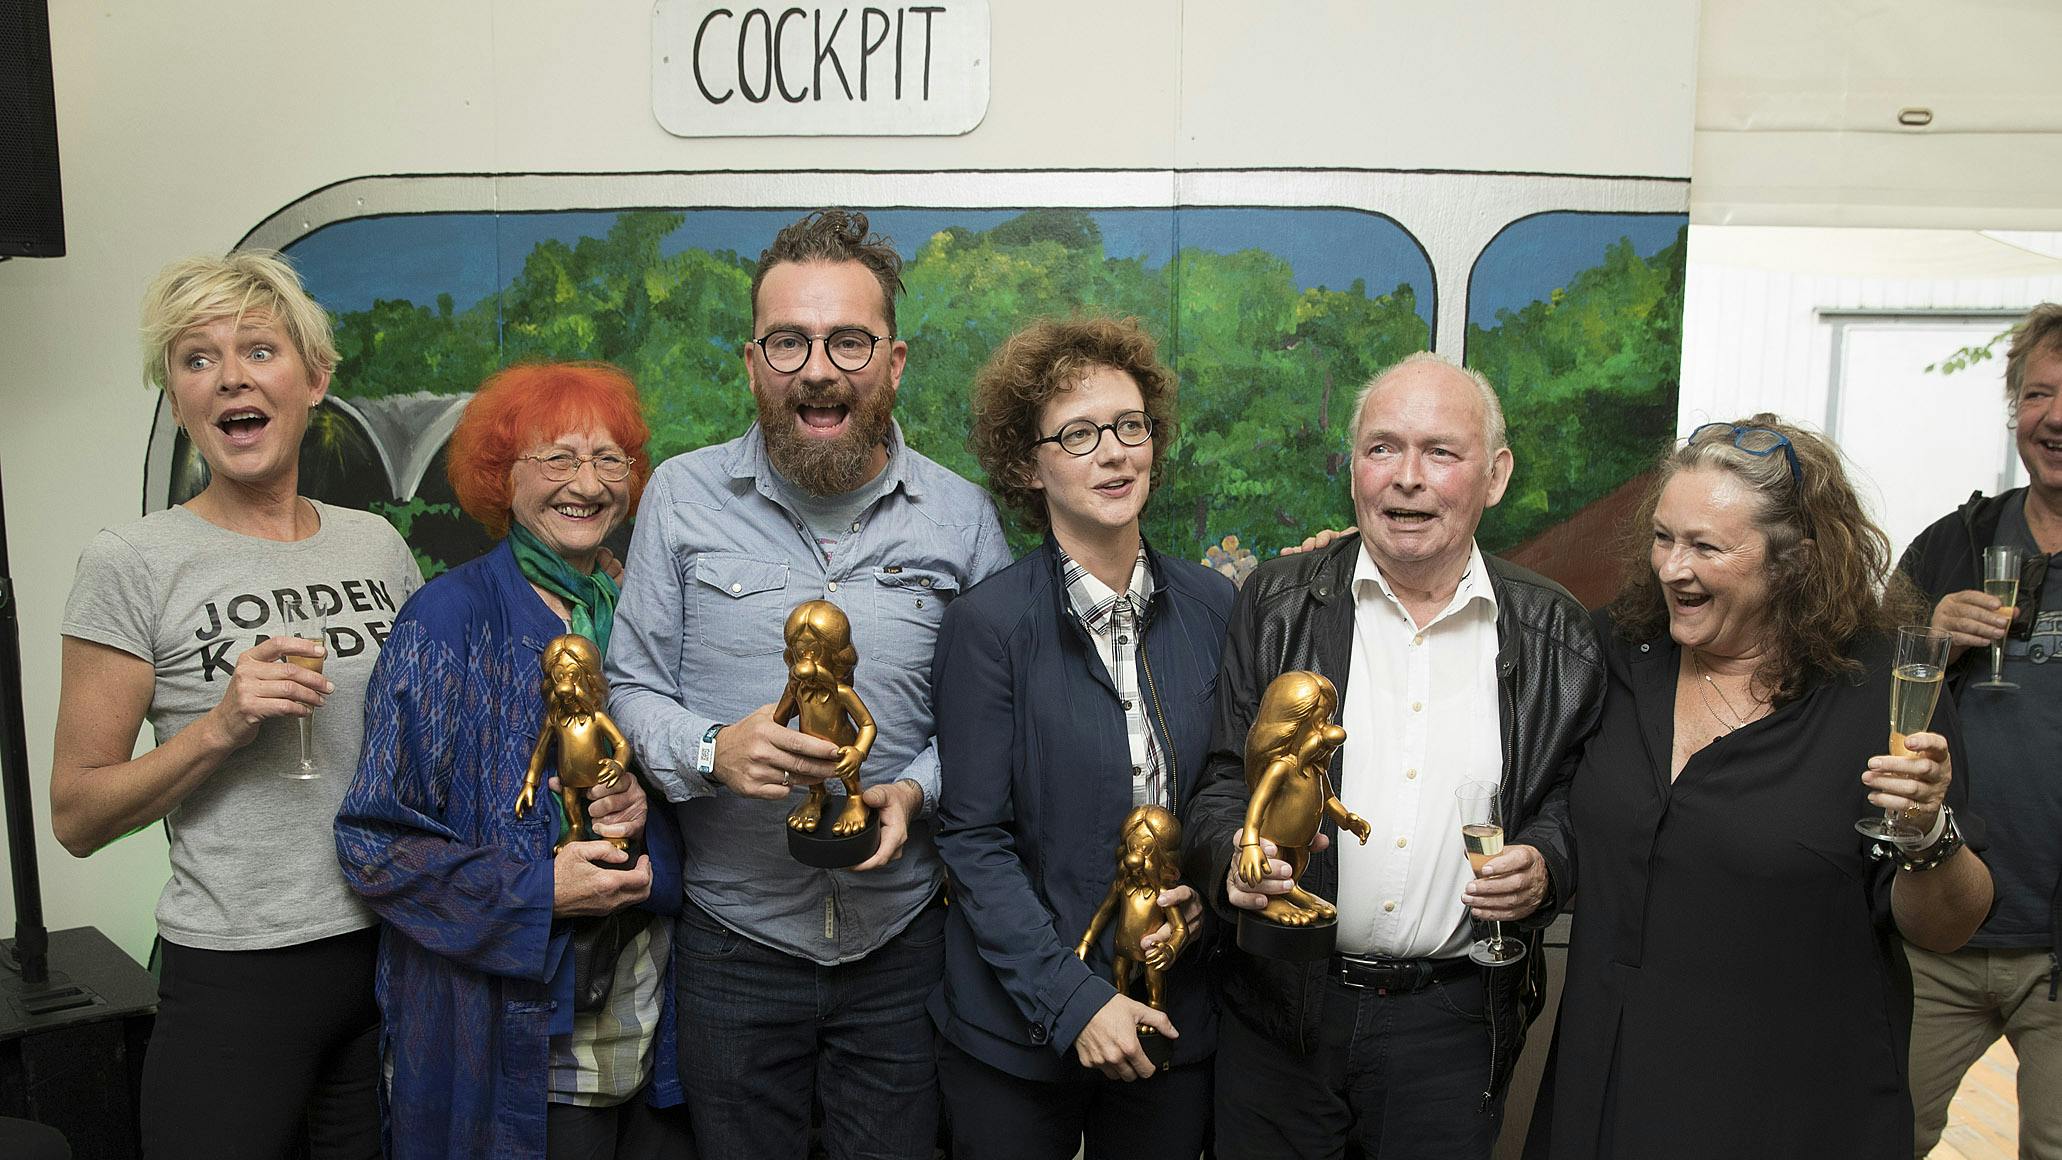 Fra venstre er det Søs Egelind, Jytte Abildstrøm, Mikael Simpson, Marie Key, Peter Belli og Kirsten Lehfeldt